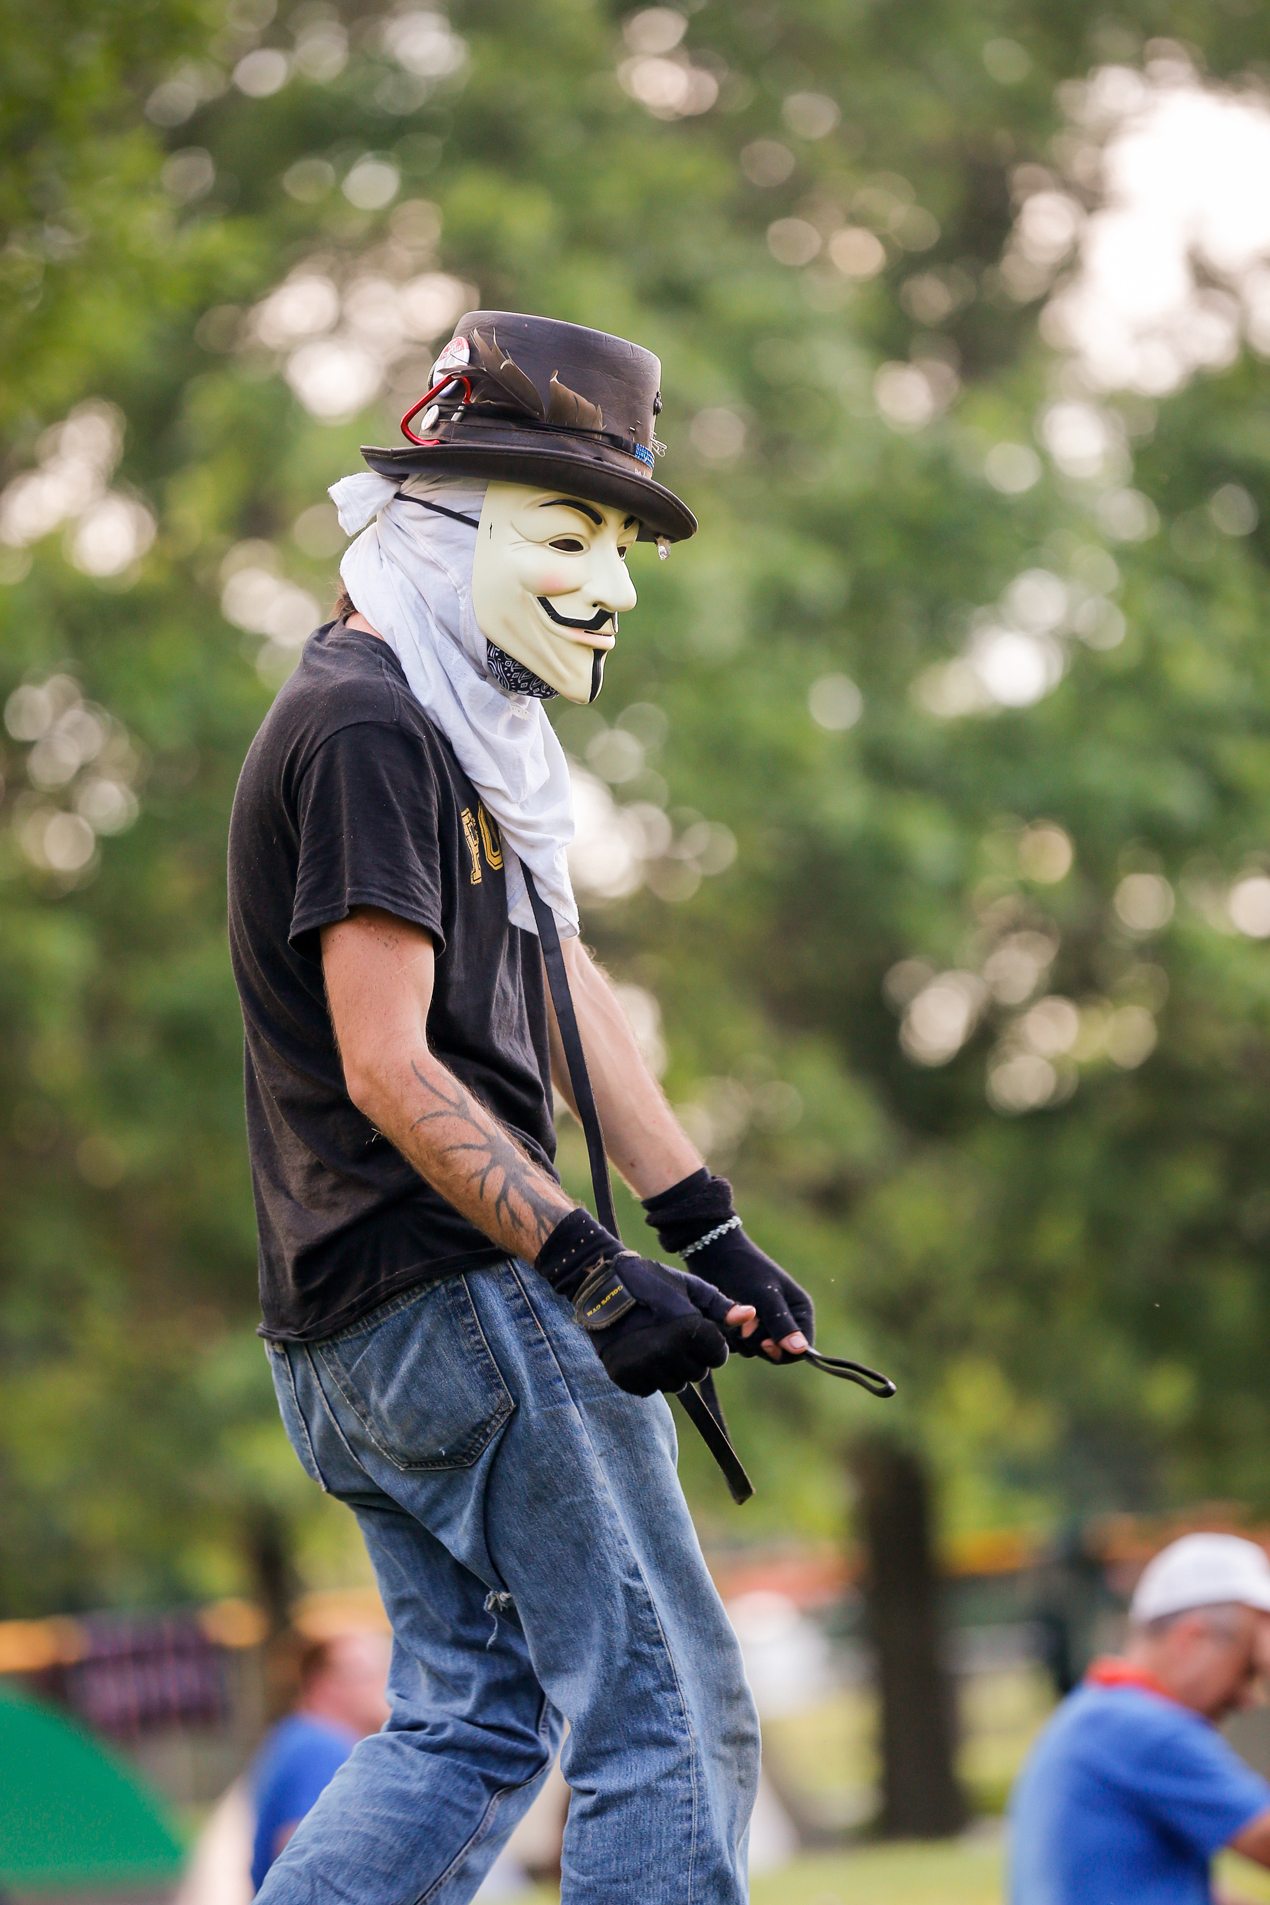 2016 DNC Protestor in Guy Fawkes Mask